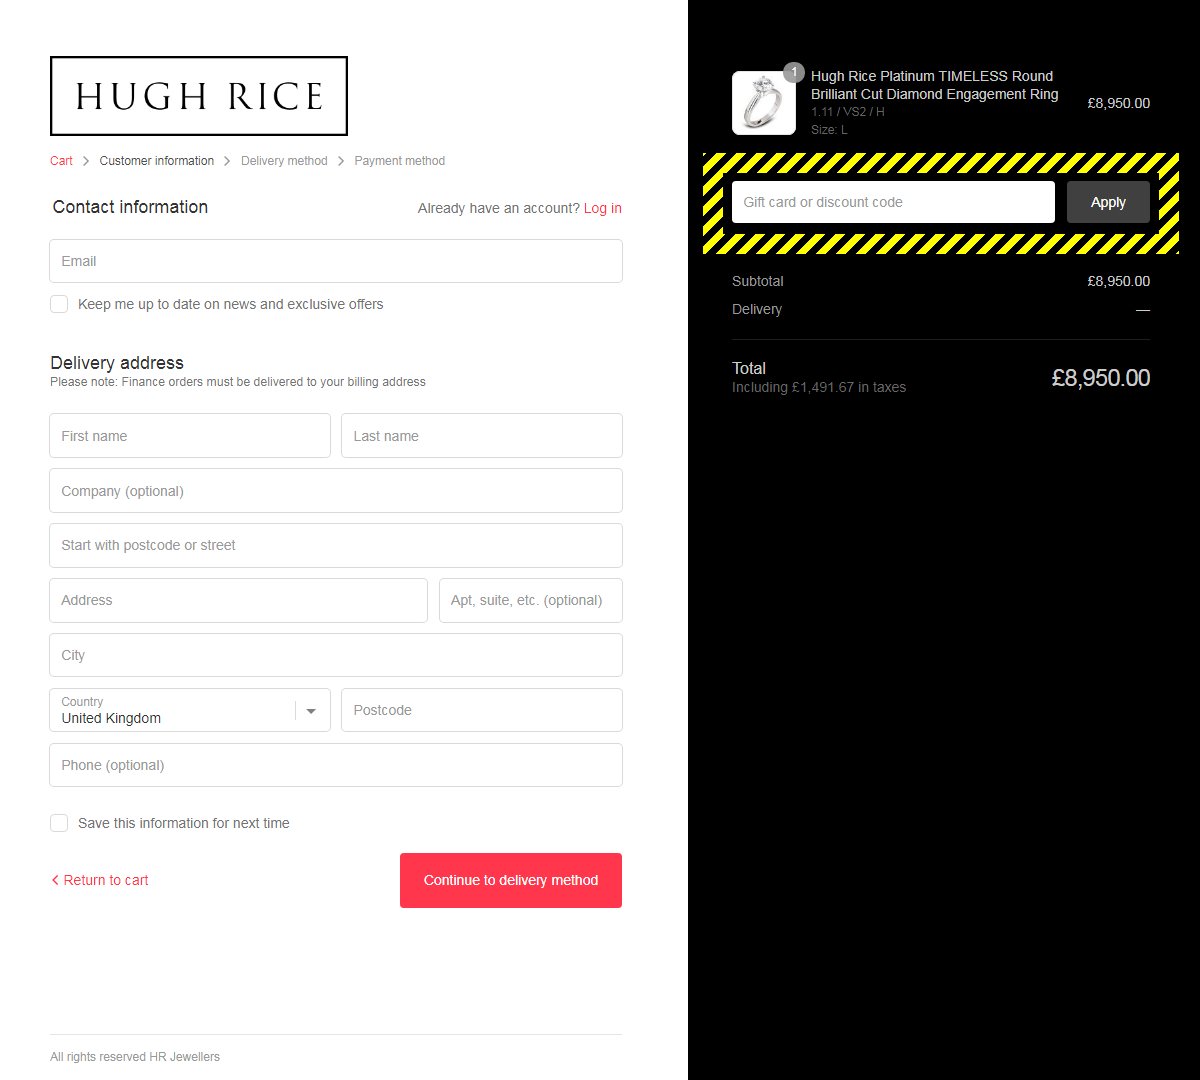 Hugh Rice Discount Code